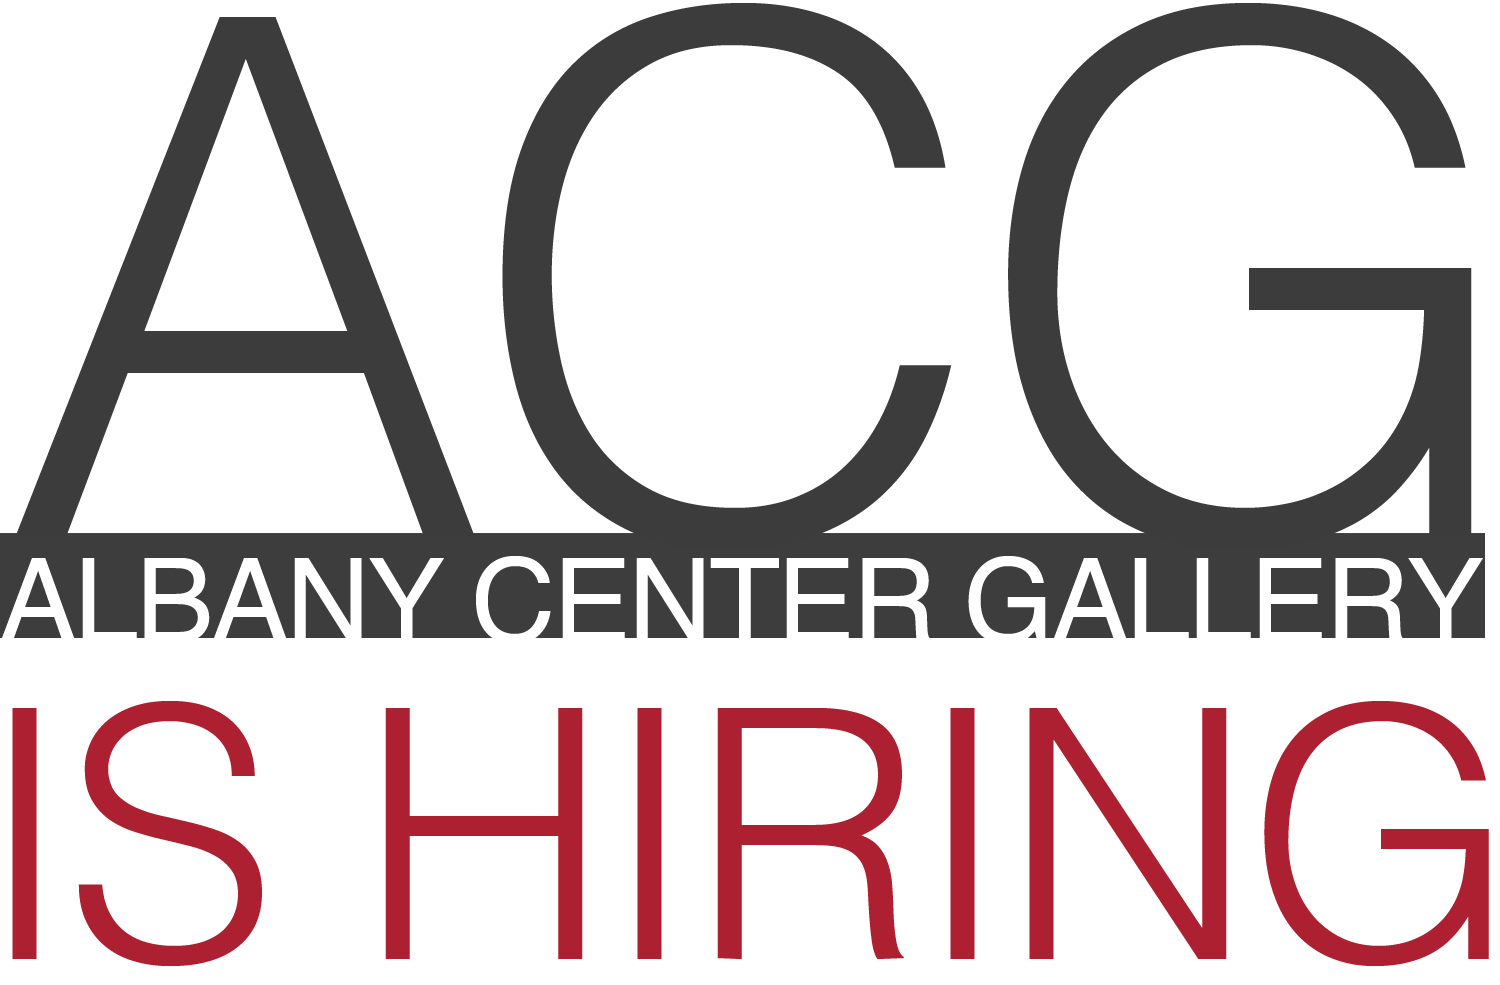 hiring albany center gallery design 